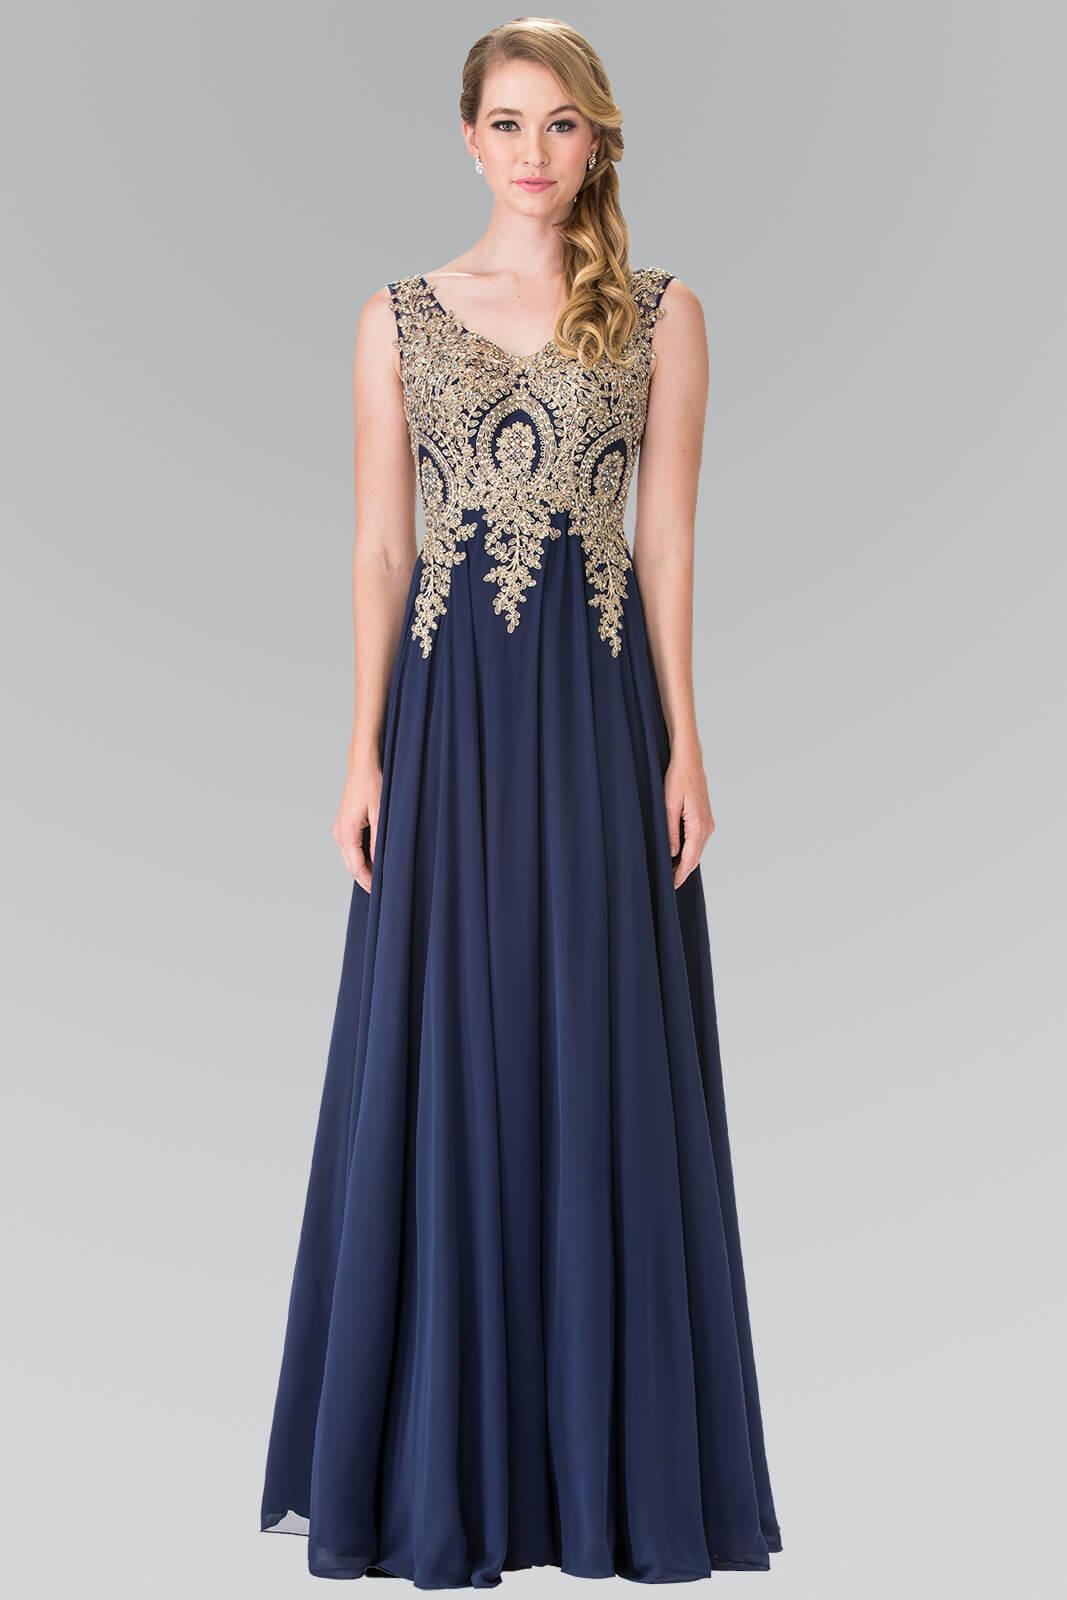 Embroidered Chiffon Long Prom Dress Formal - The Dress Outlet Elizabeth K